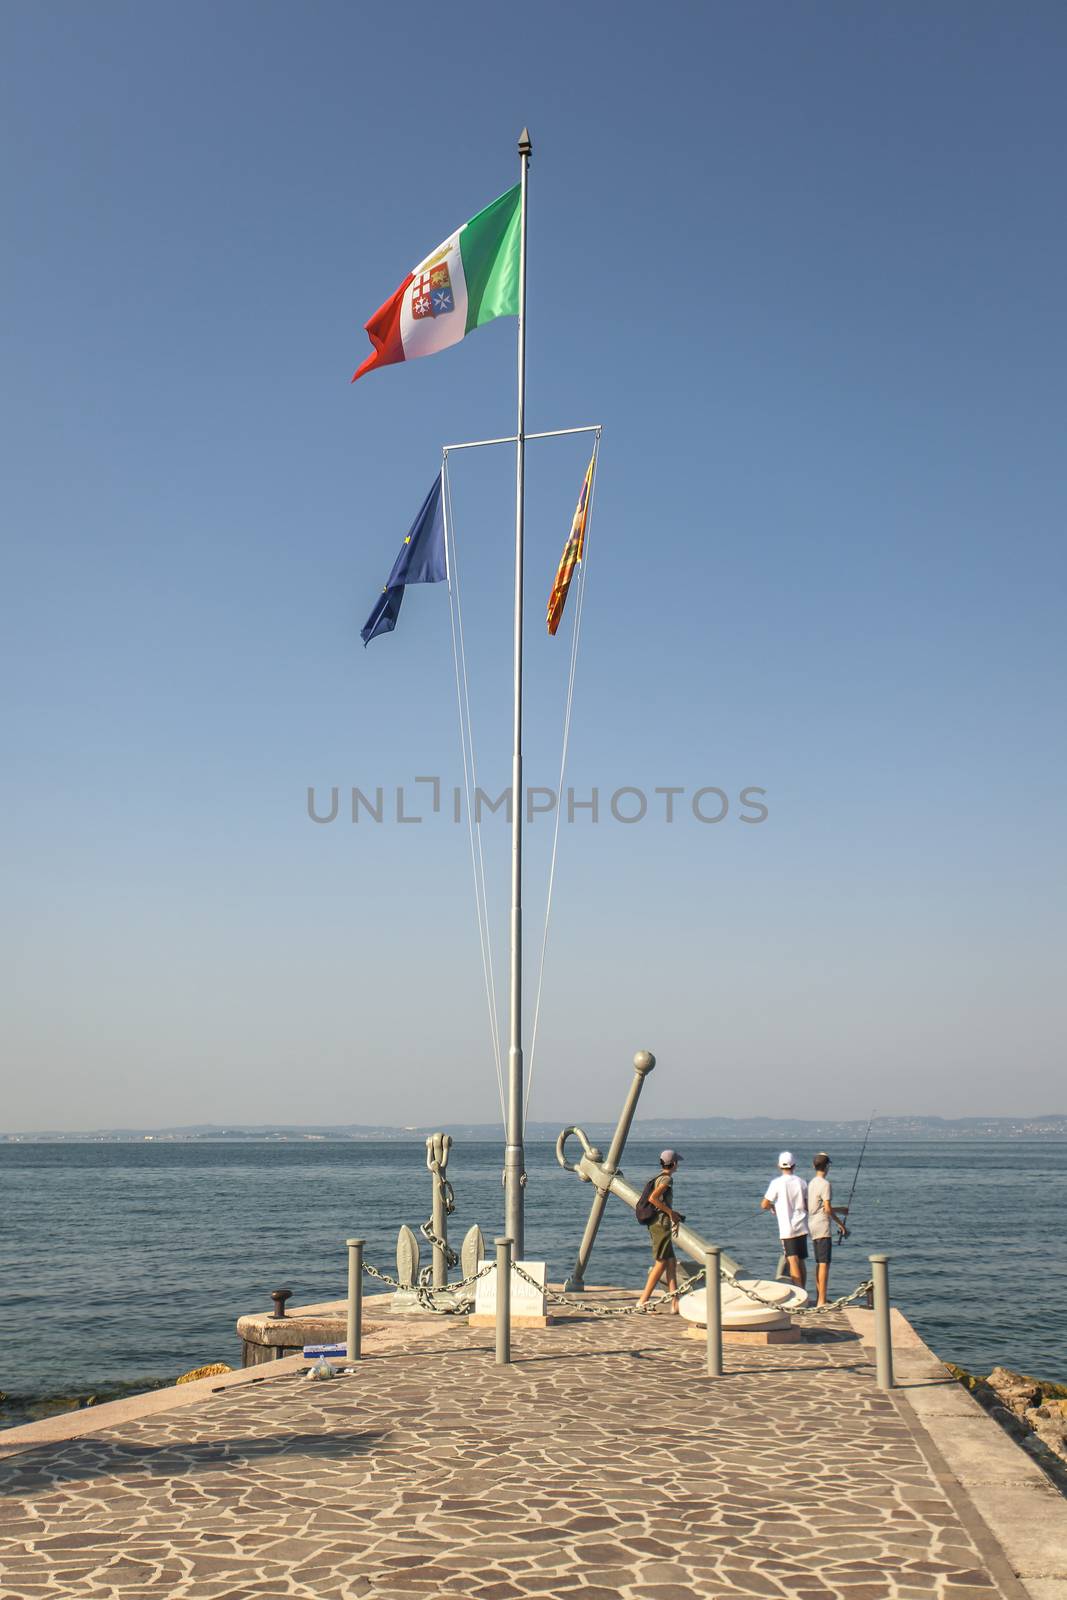 Bardolino Pier on Grada Lake in Italy 5 by pippocarlot